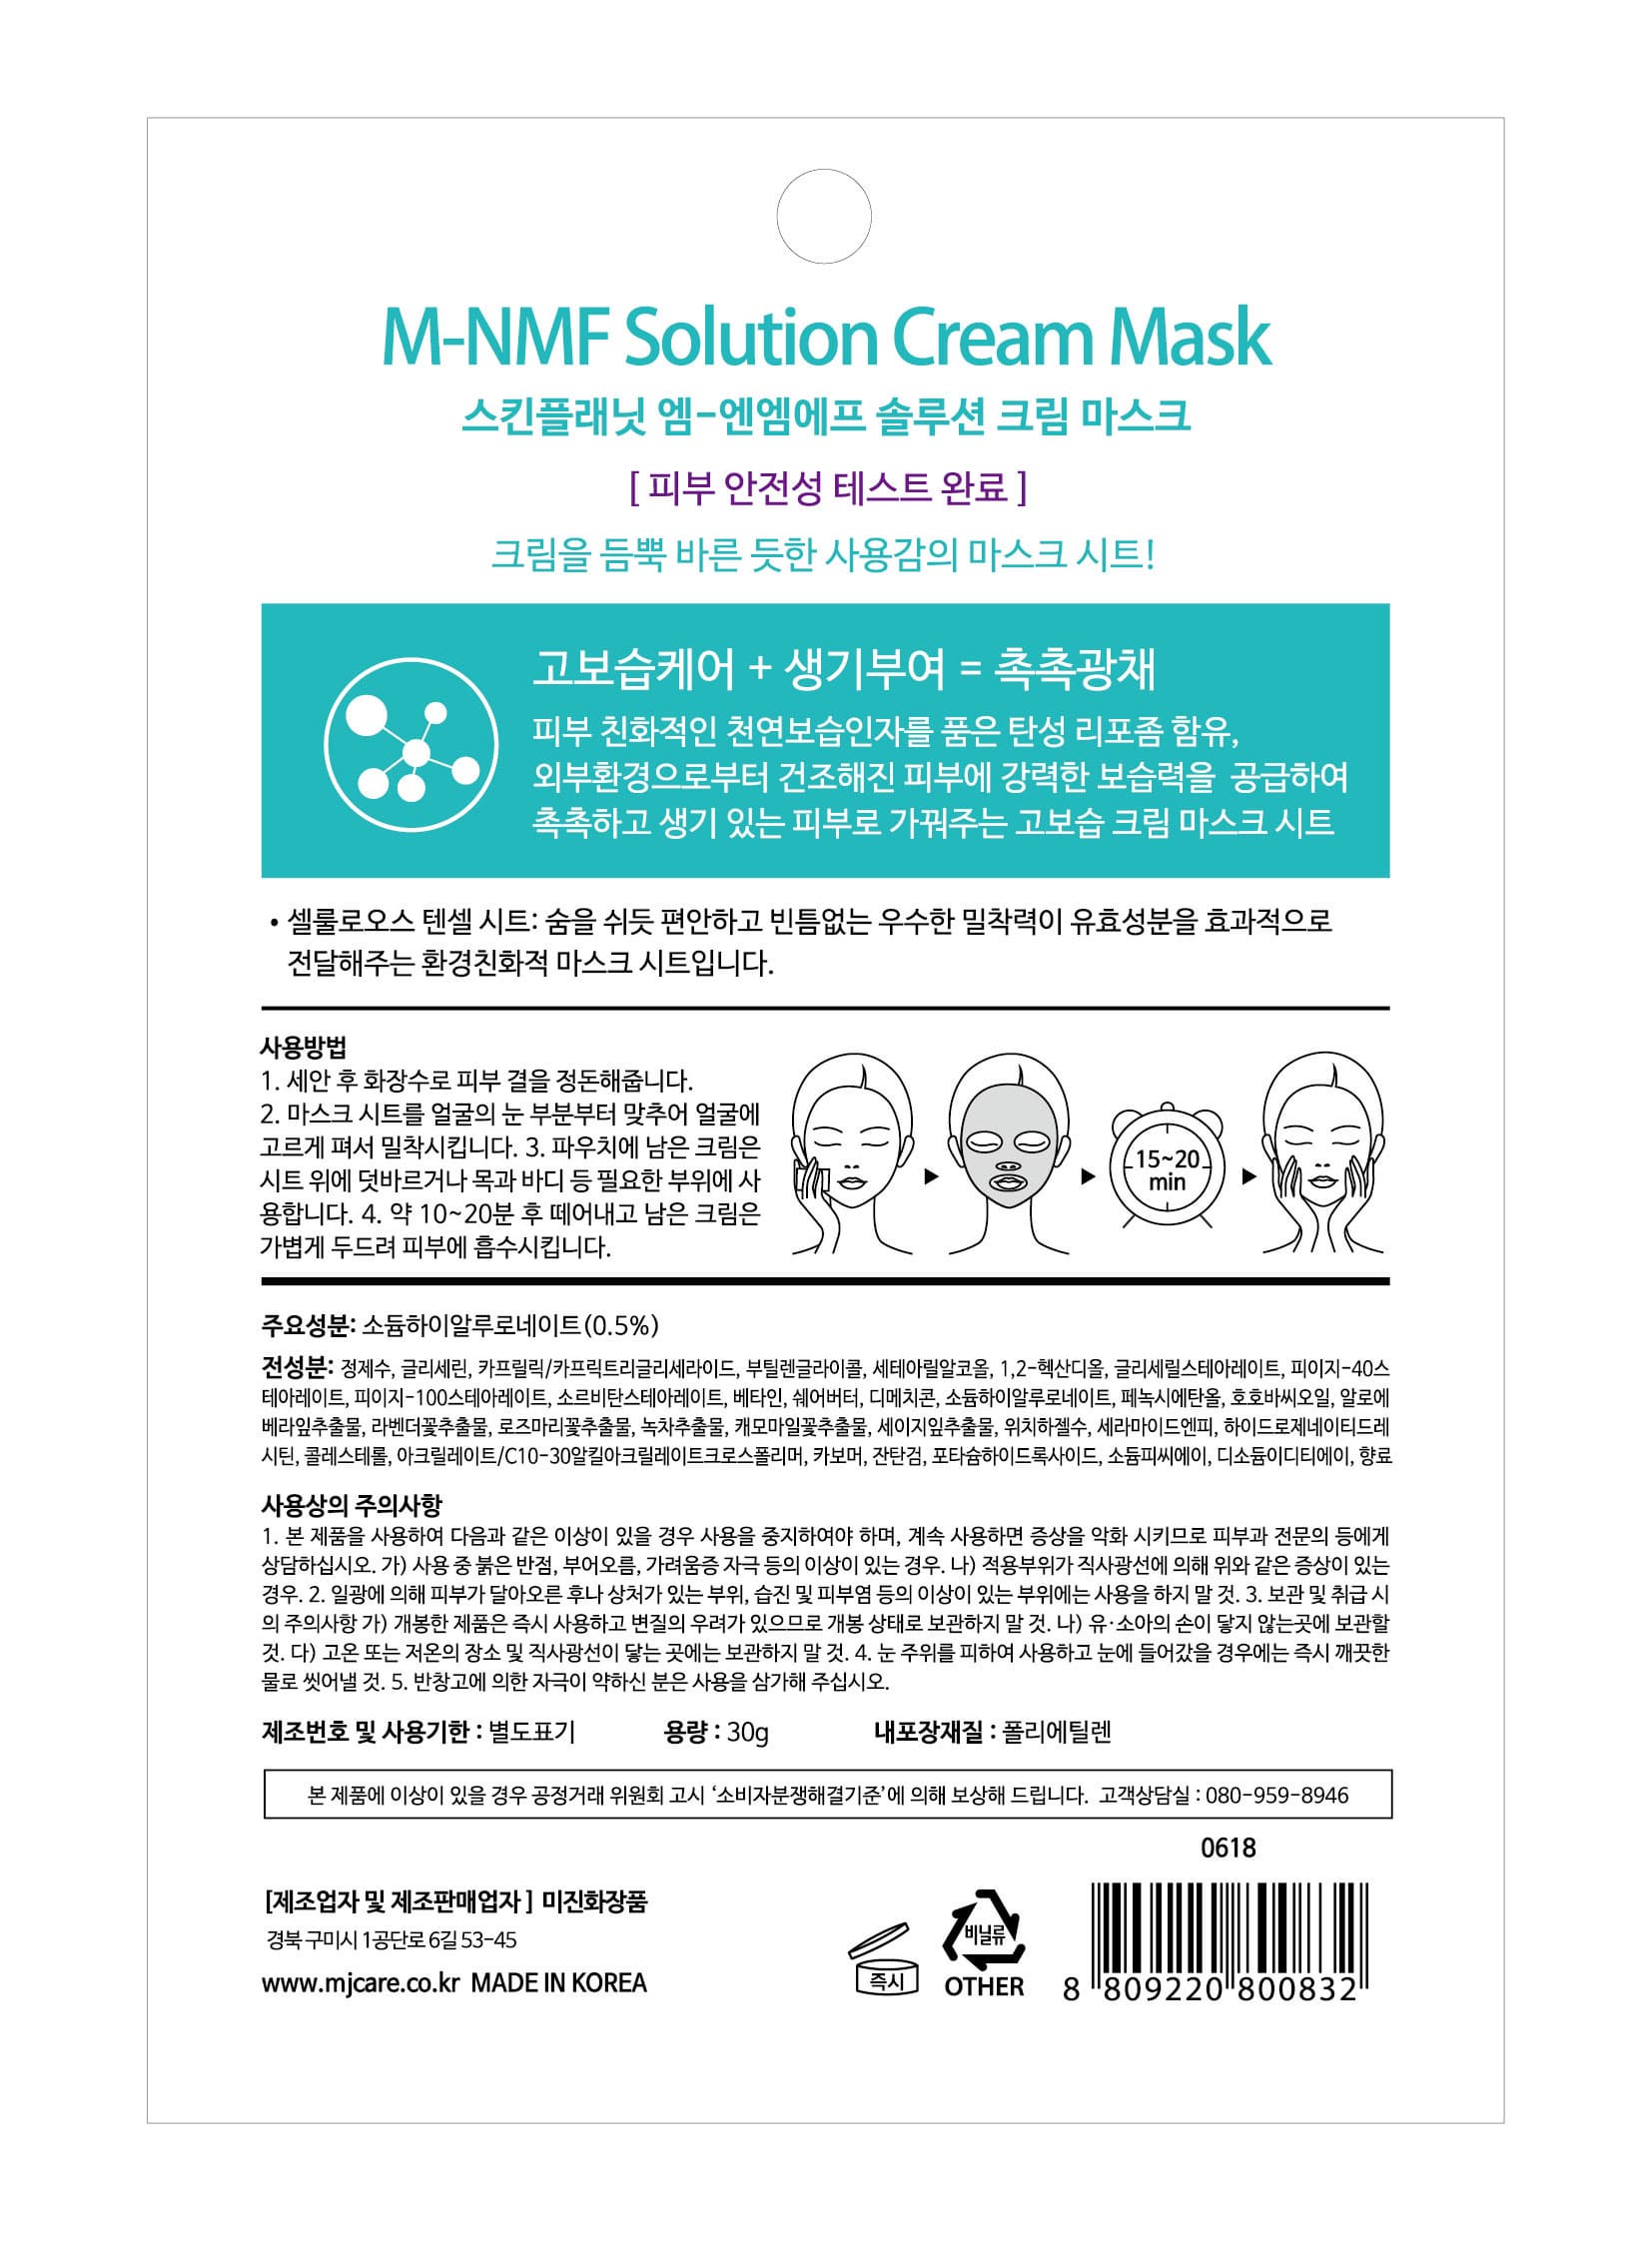 Solution Cream Mask